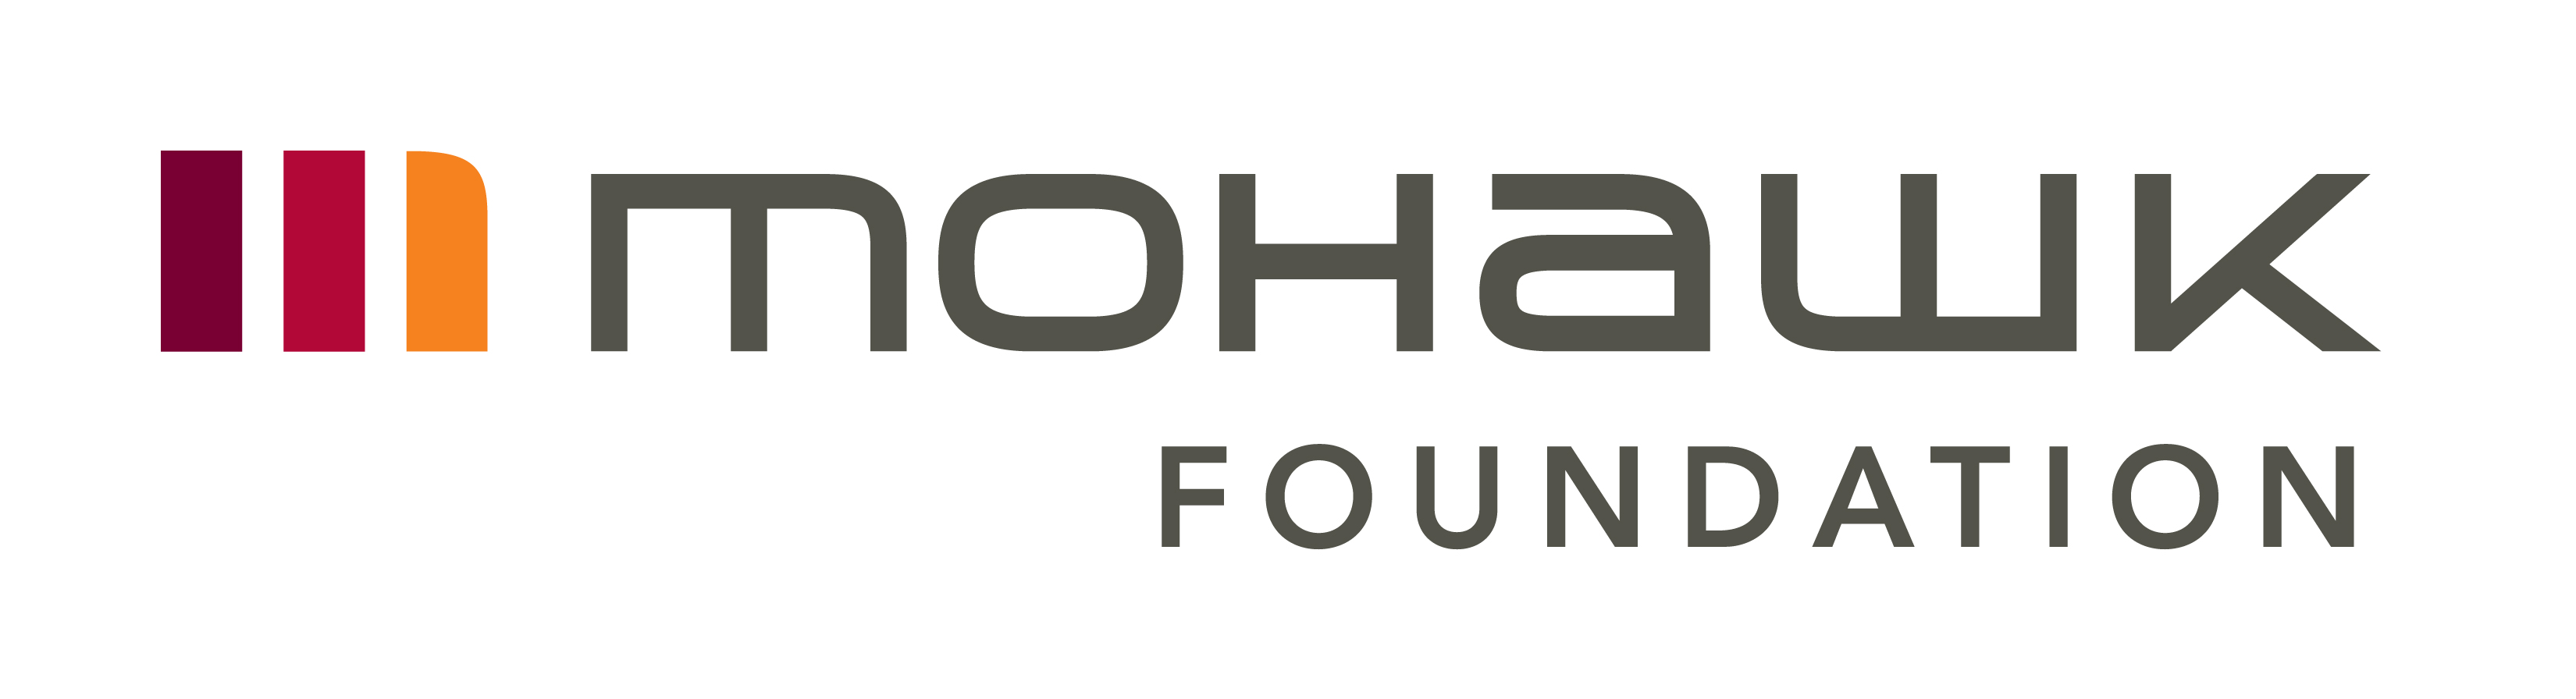 "Foundation Logo"